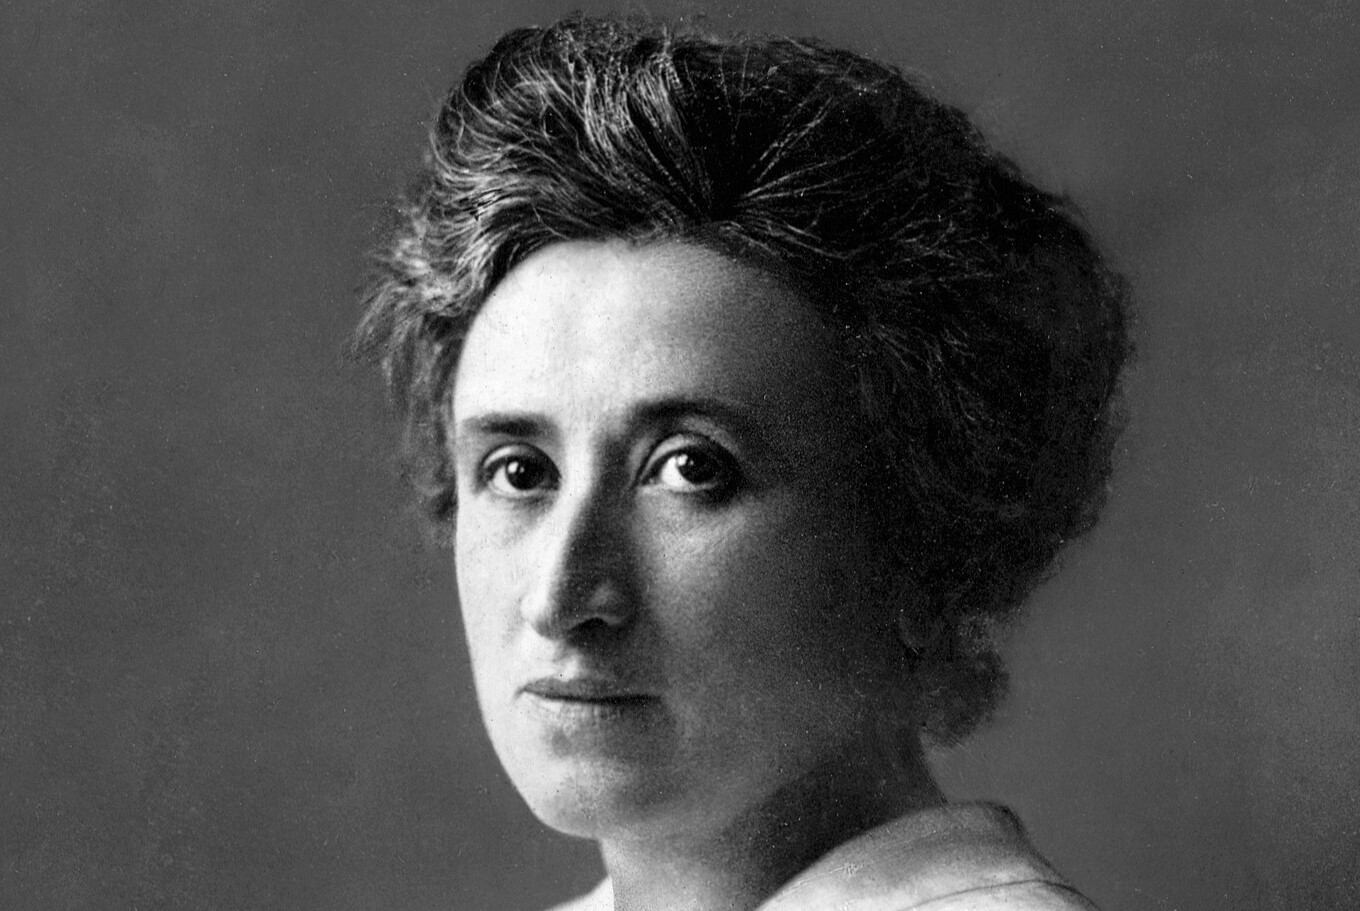 Rosa Luxemburg Image public domain